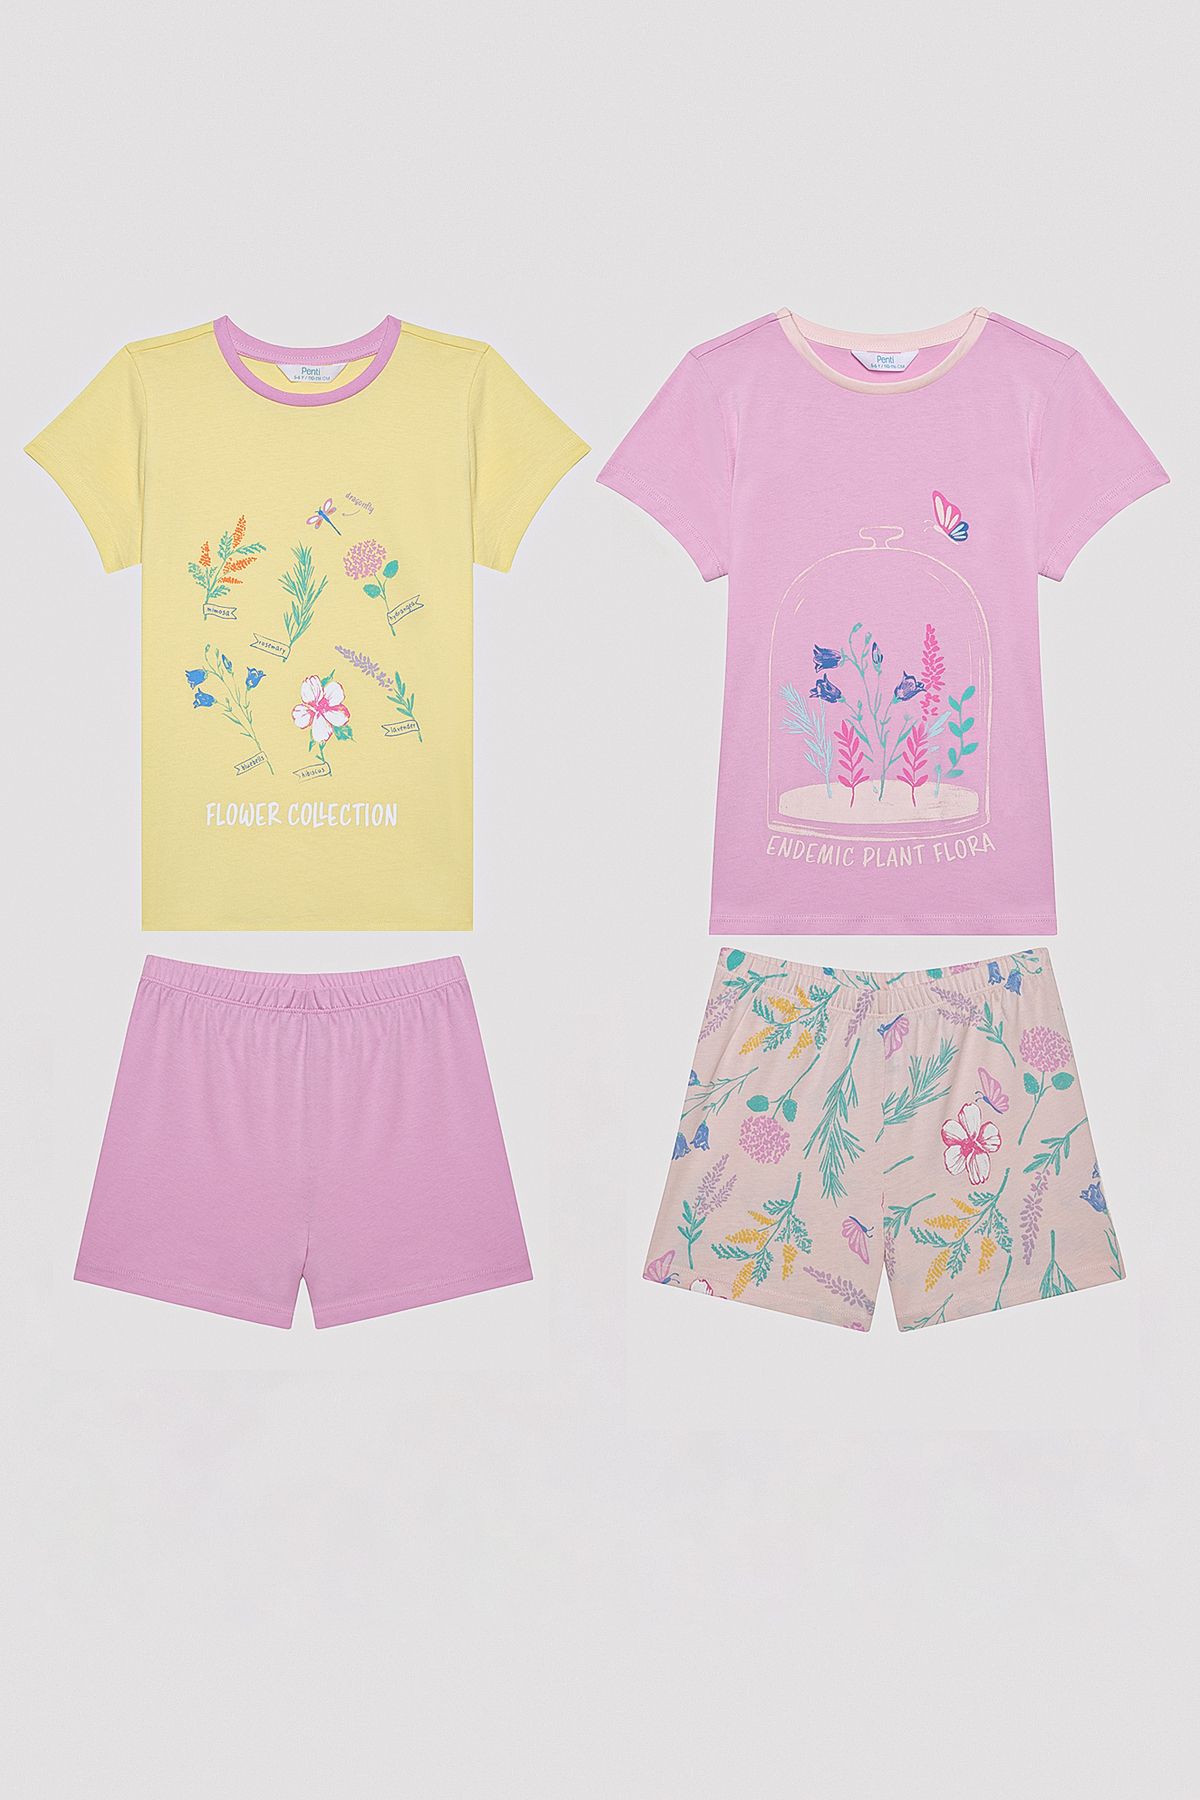 Penti Kız Çocuk Endemic Çok Renkli 2li Pijama Takımı